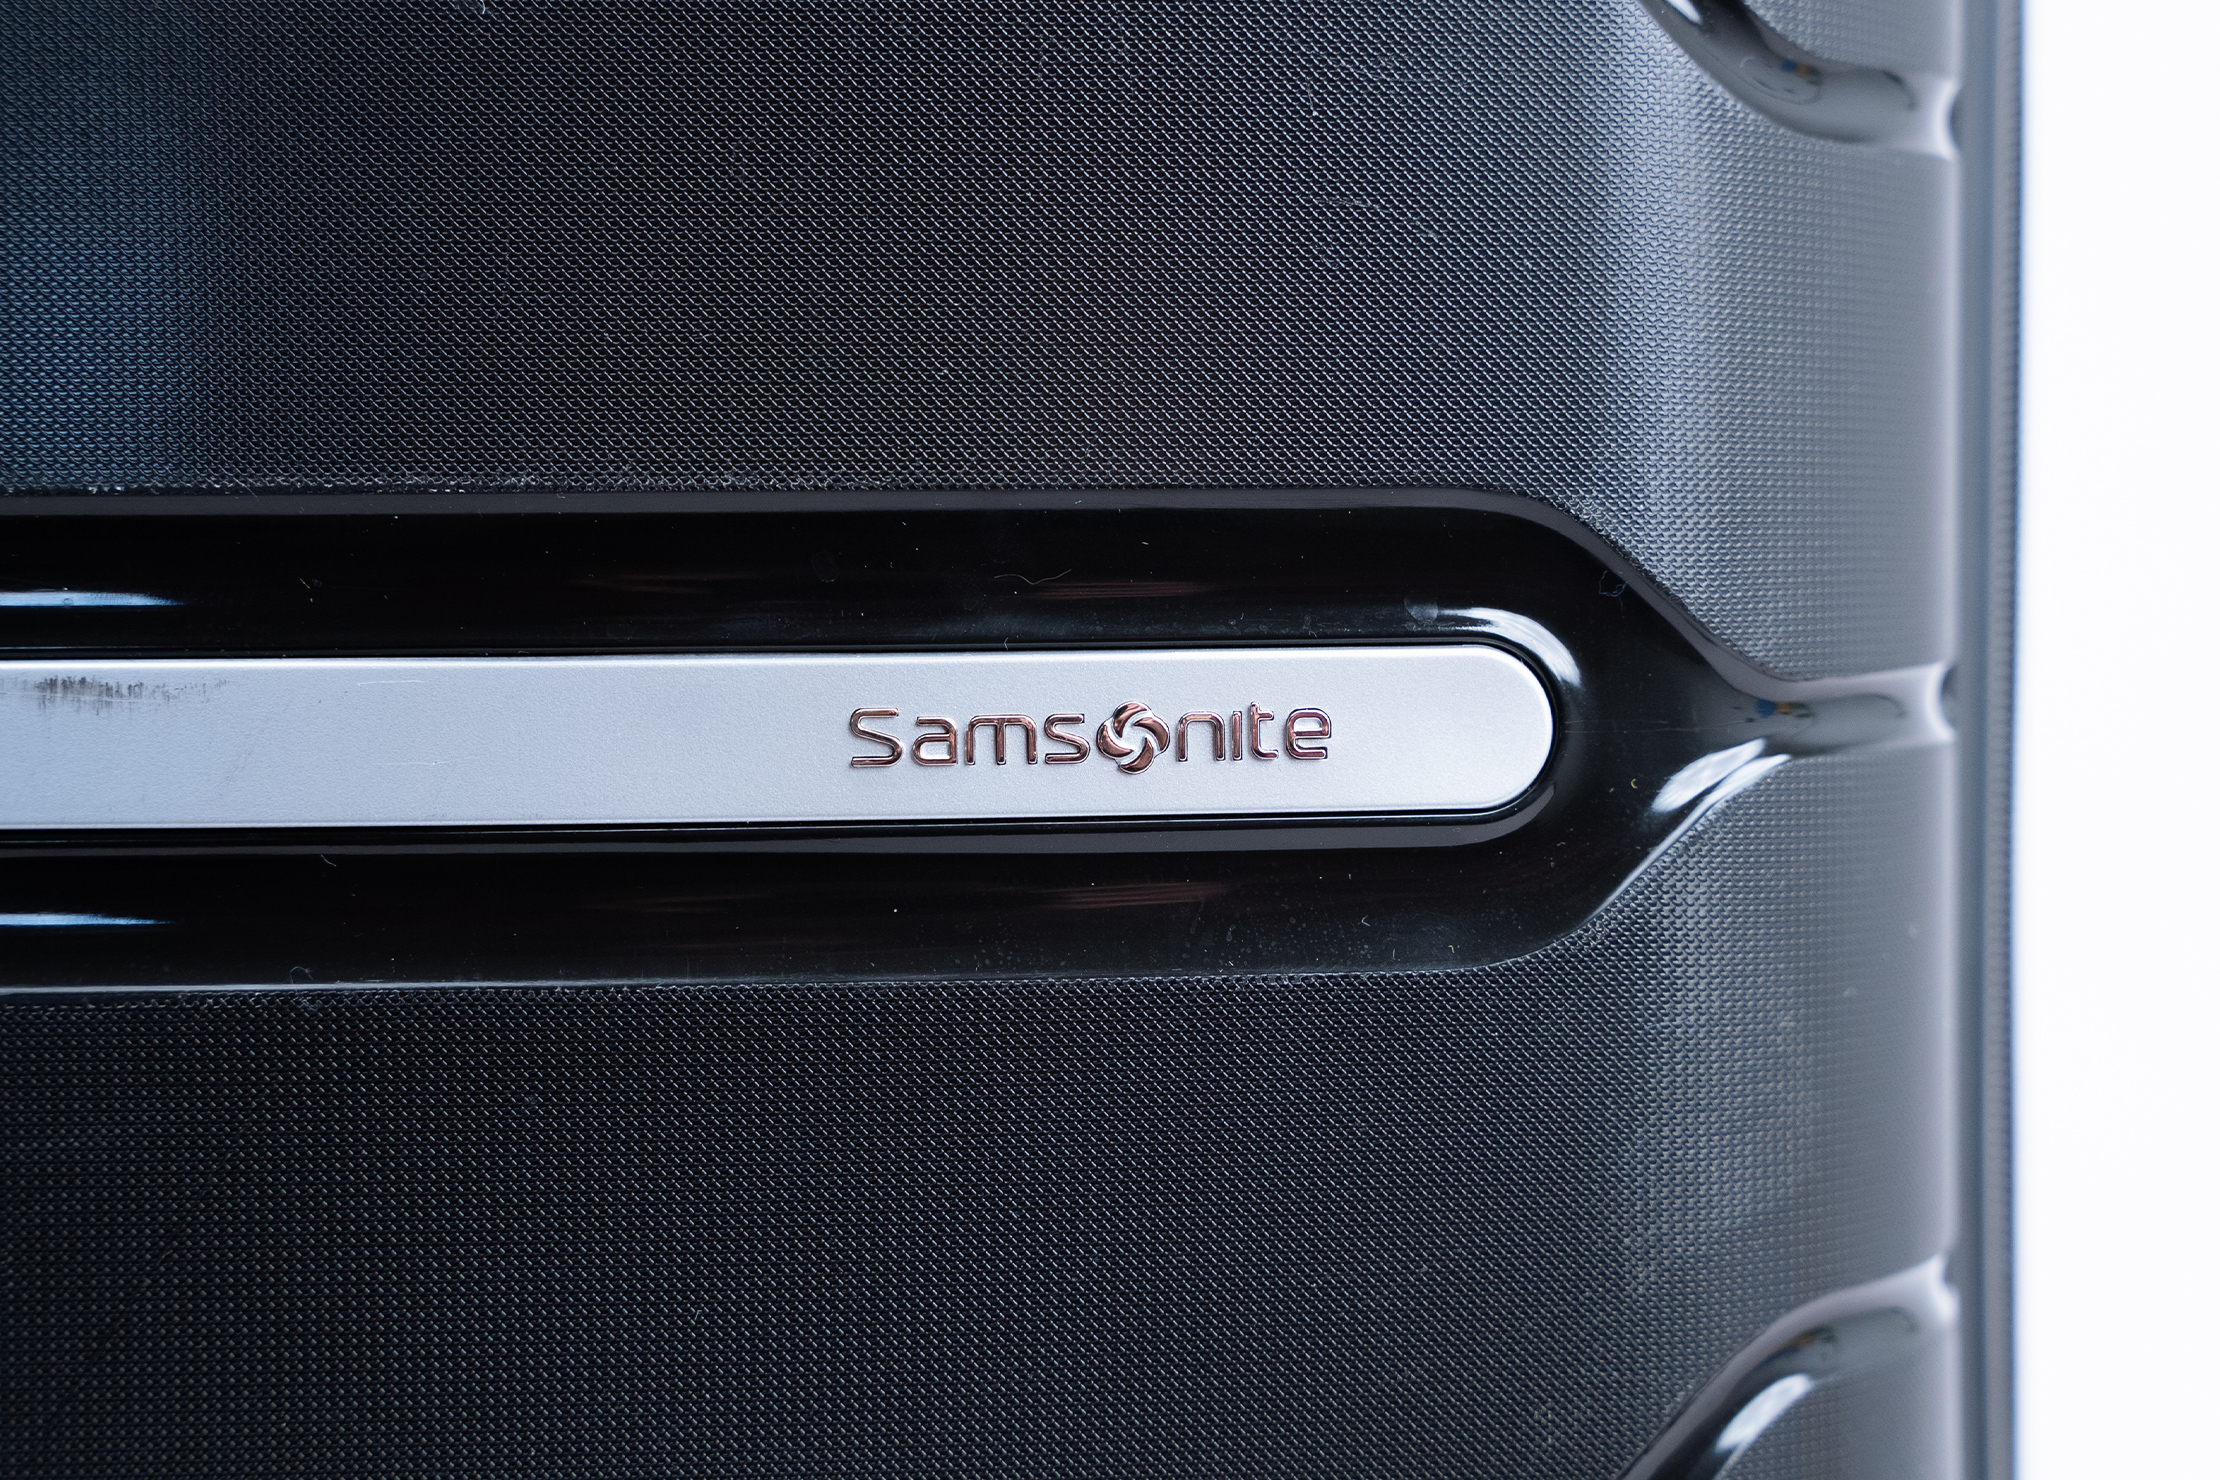 Samsonite Freeform Carry-On Spinner Brand